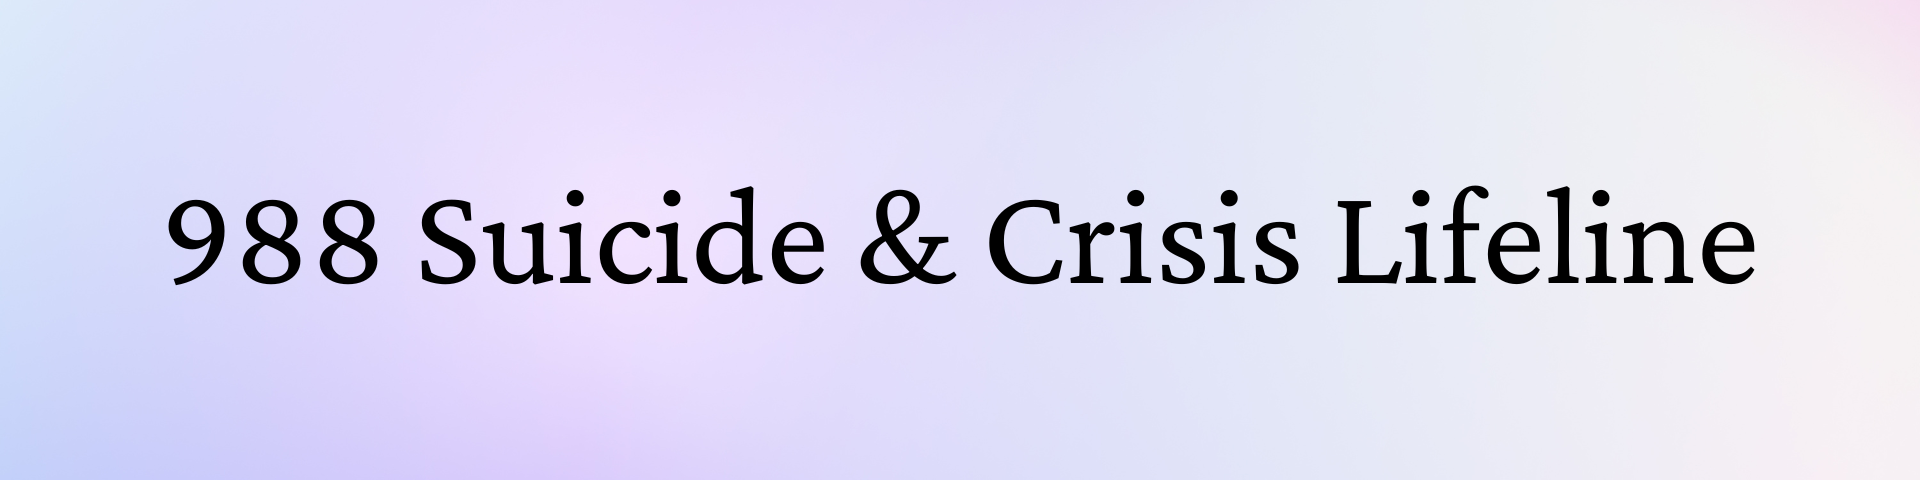 988 Suicide & Crisis Lifeline (link)